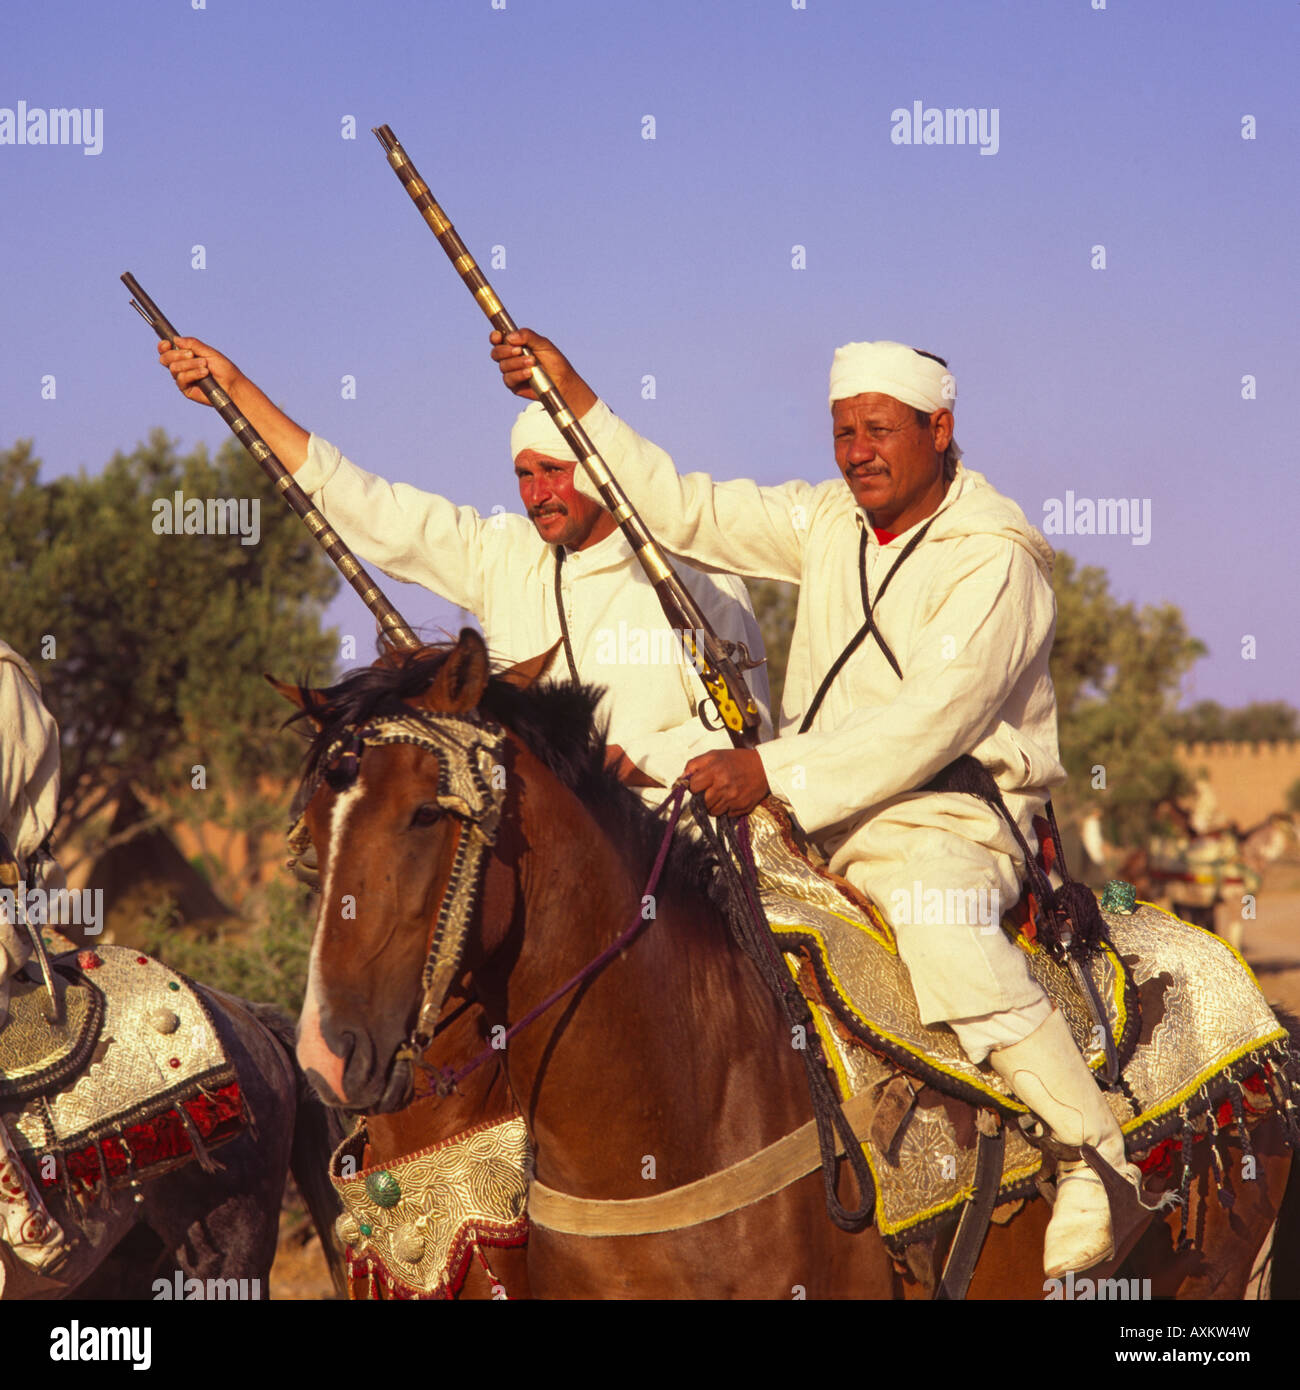 Two Berber horsemen sitting on ornate silver filigree saddles in traditional long white robes & headbands Marrakech Morocco Stock Photo